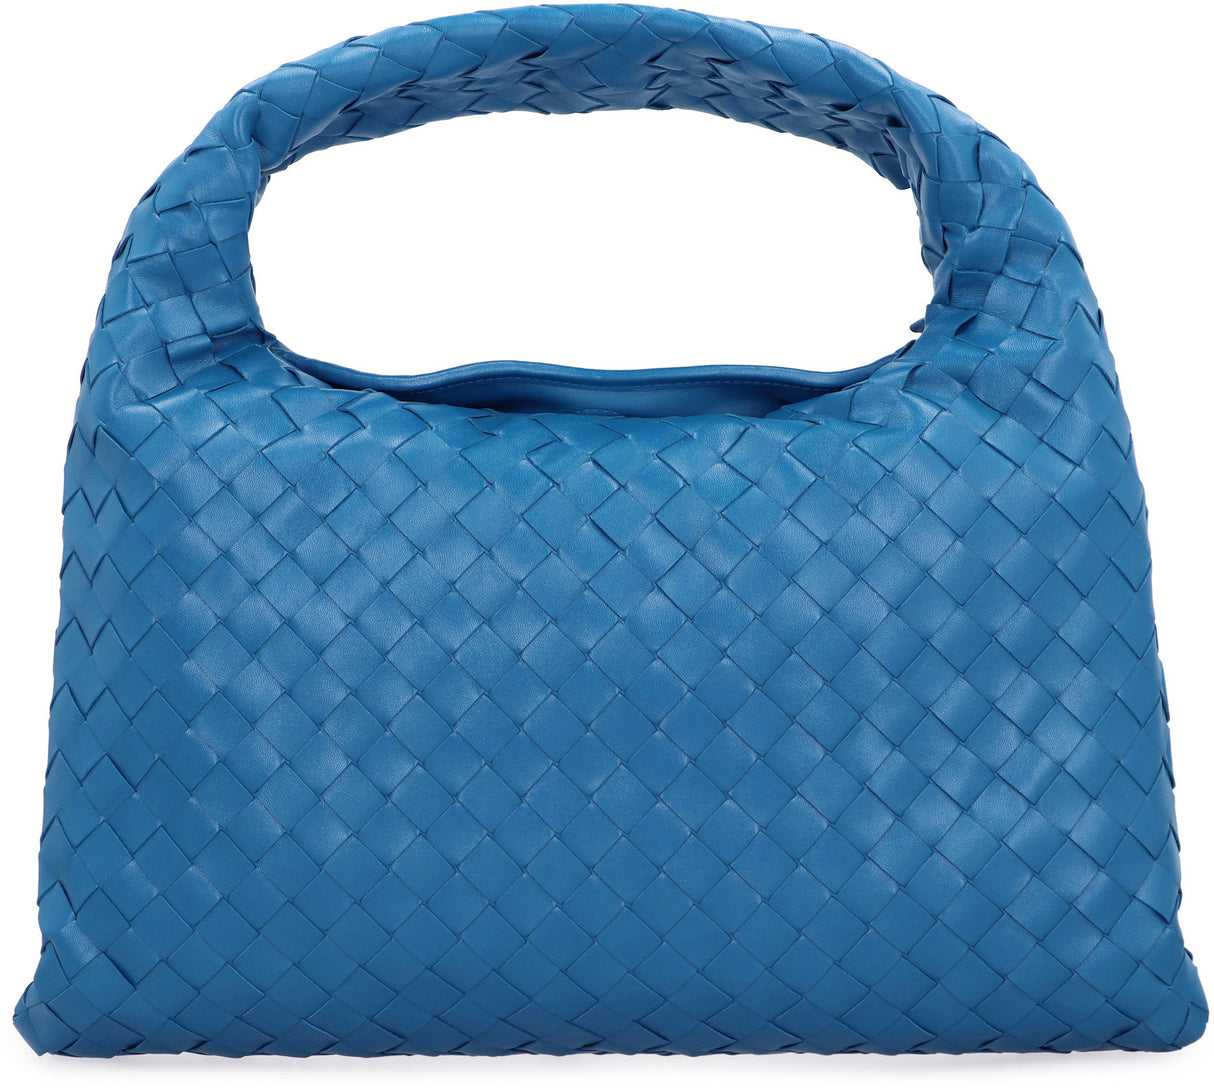 BOTTEGA VENETA Intrecciato Blue Leather Mini Top-Handle Bag with Gold-Tone Hardware